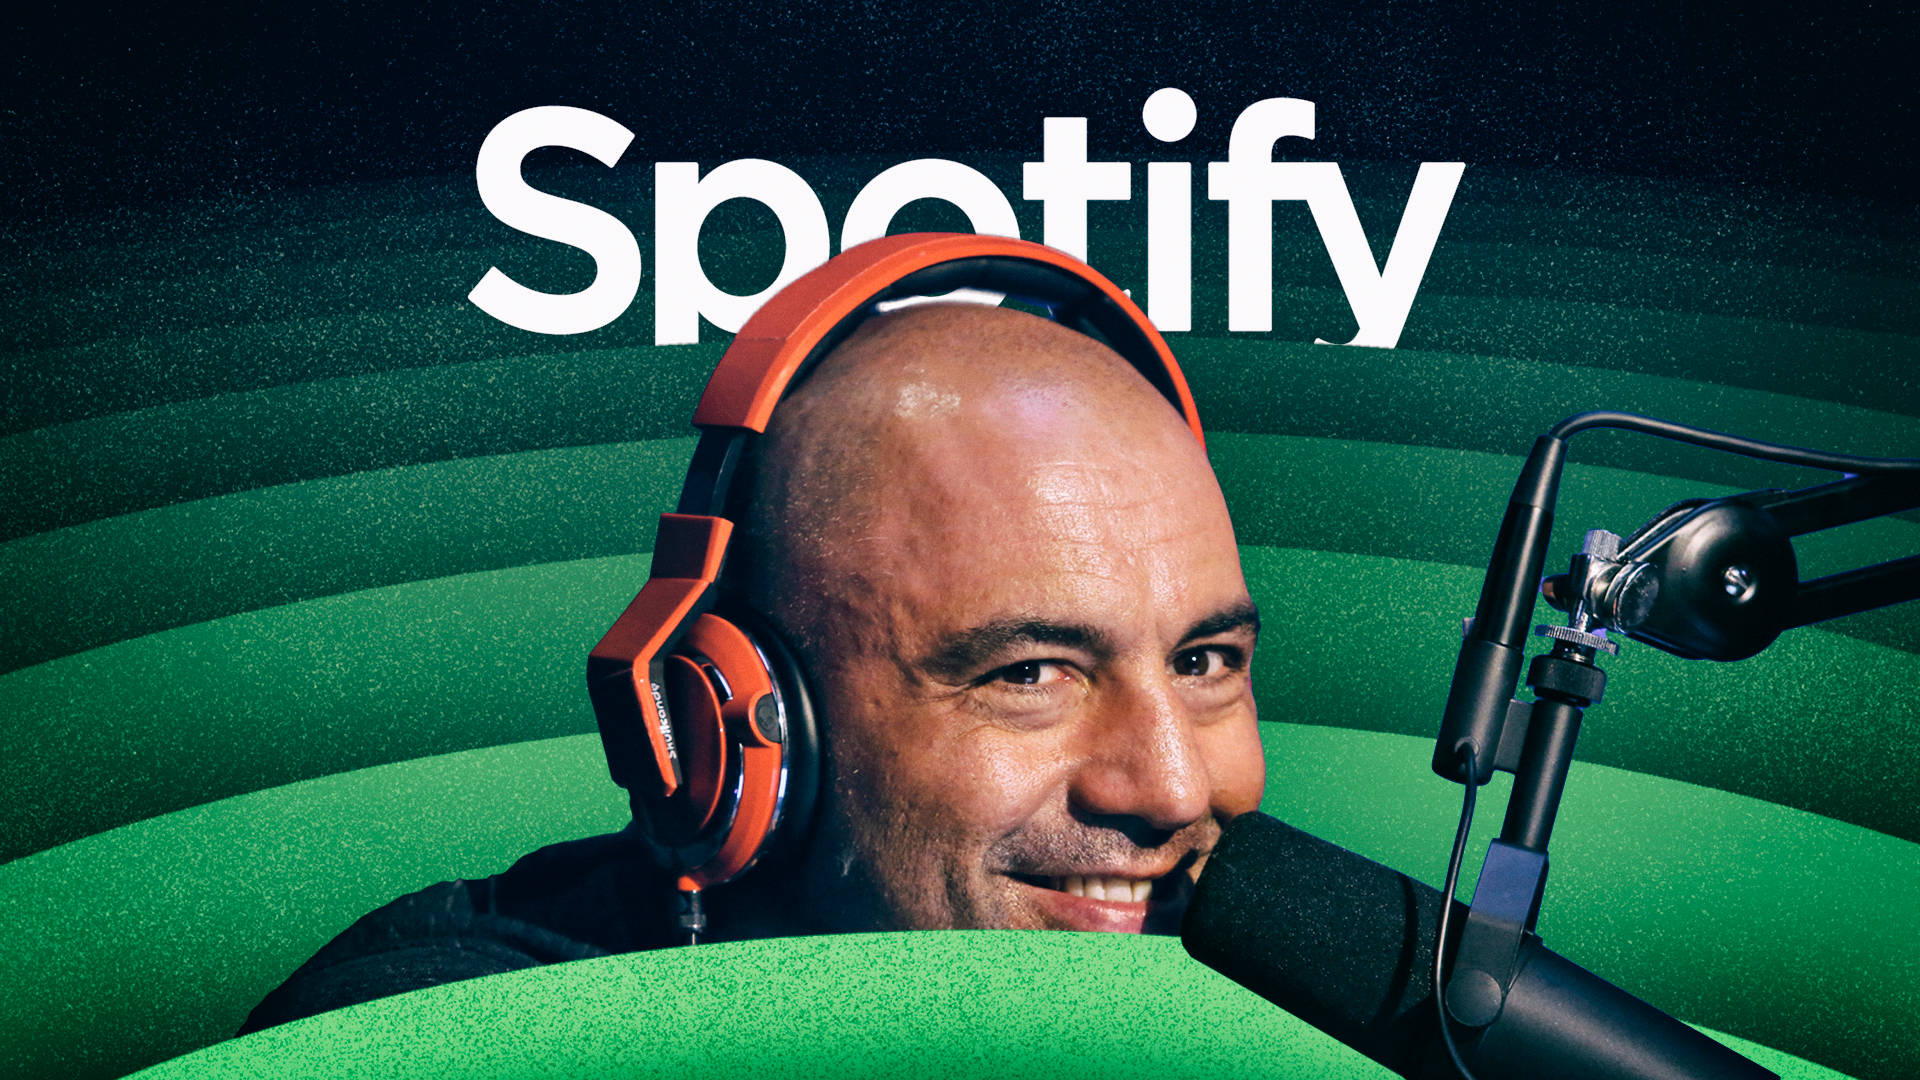 Joe Rogan With Spotify Logo Wallpaper